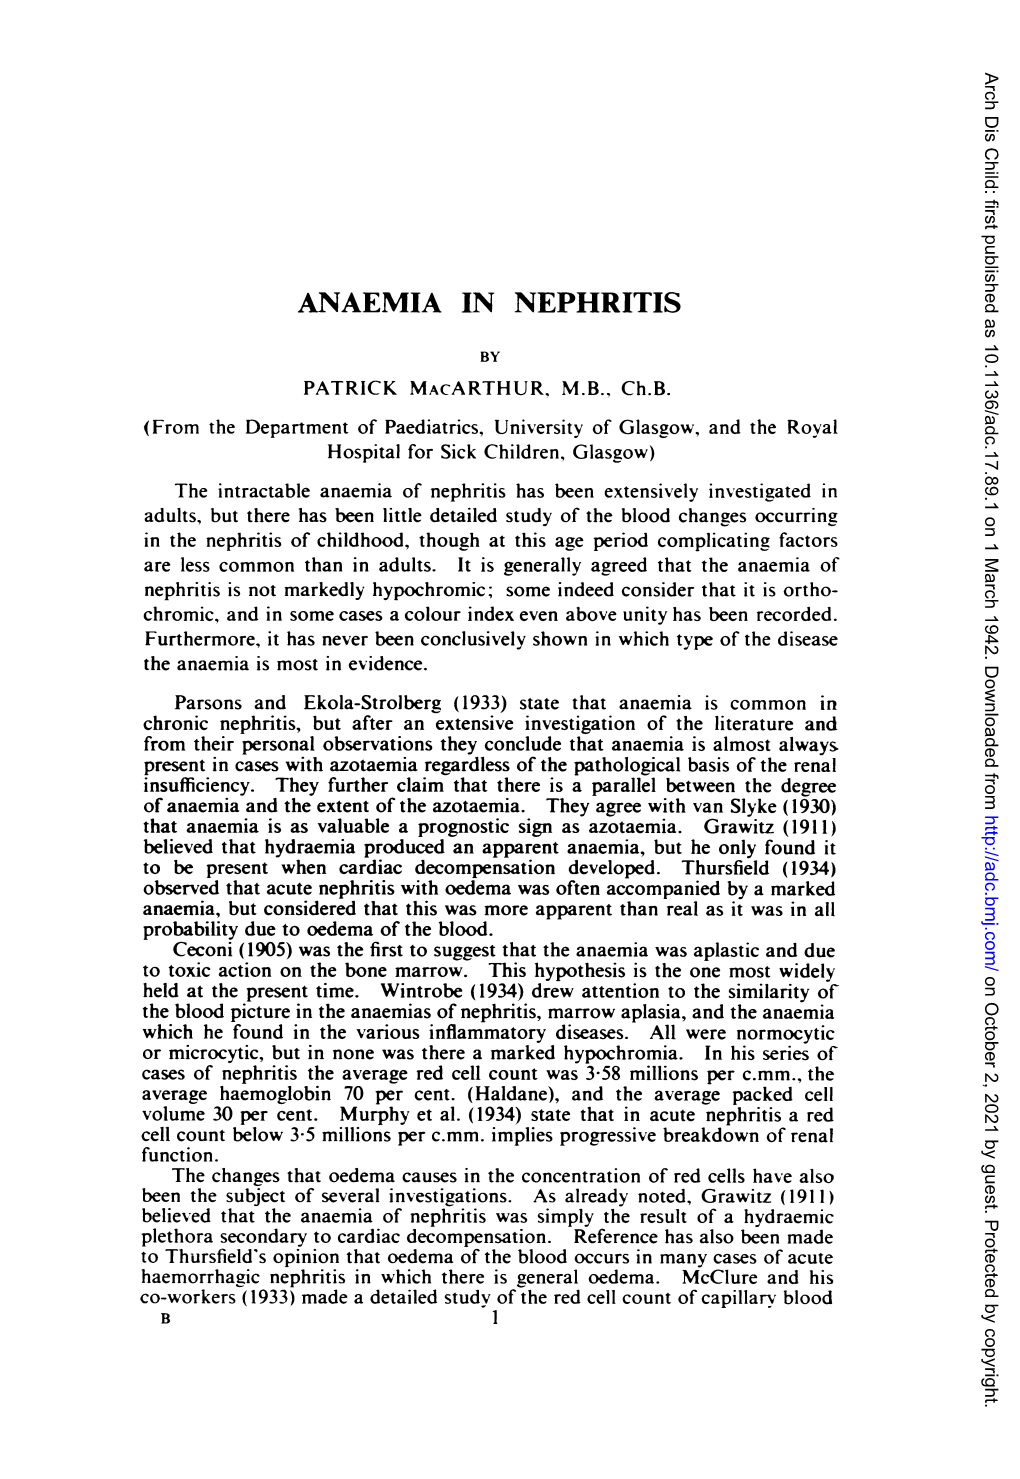 Anaemia in Nephritis